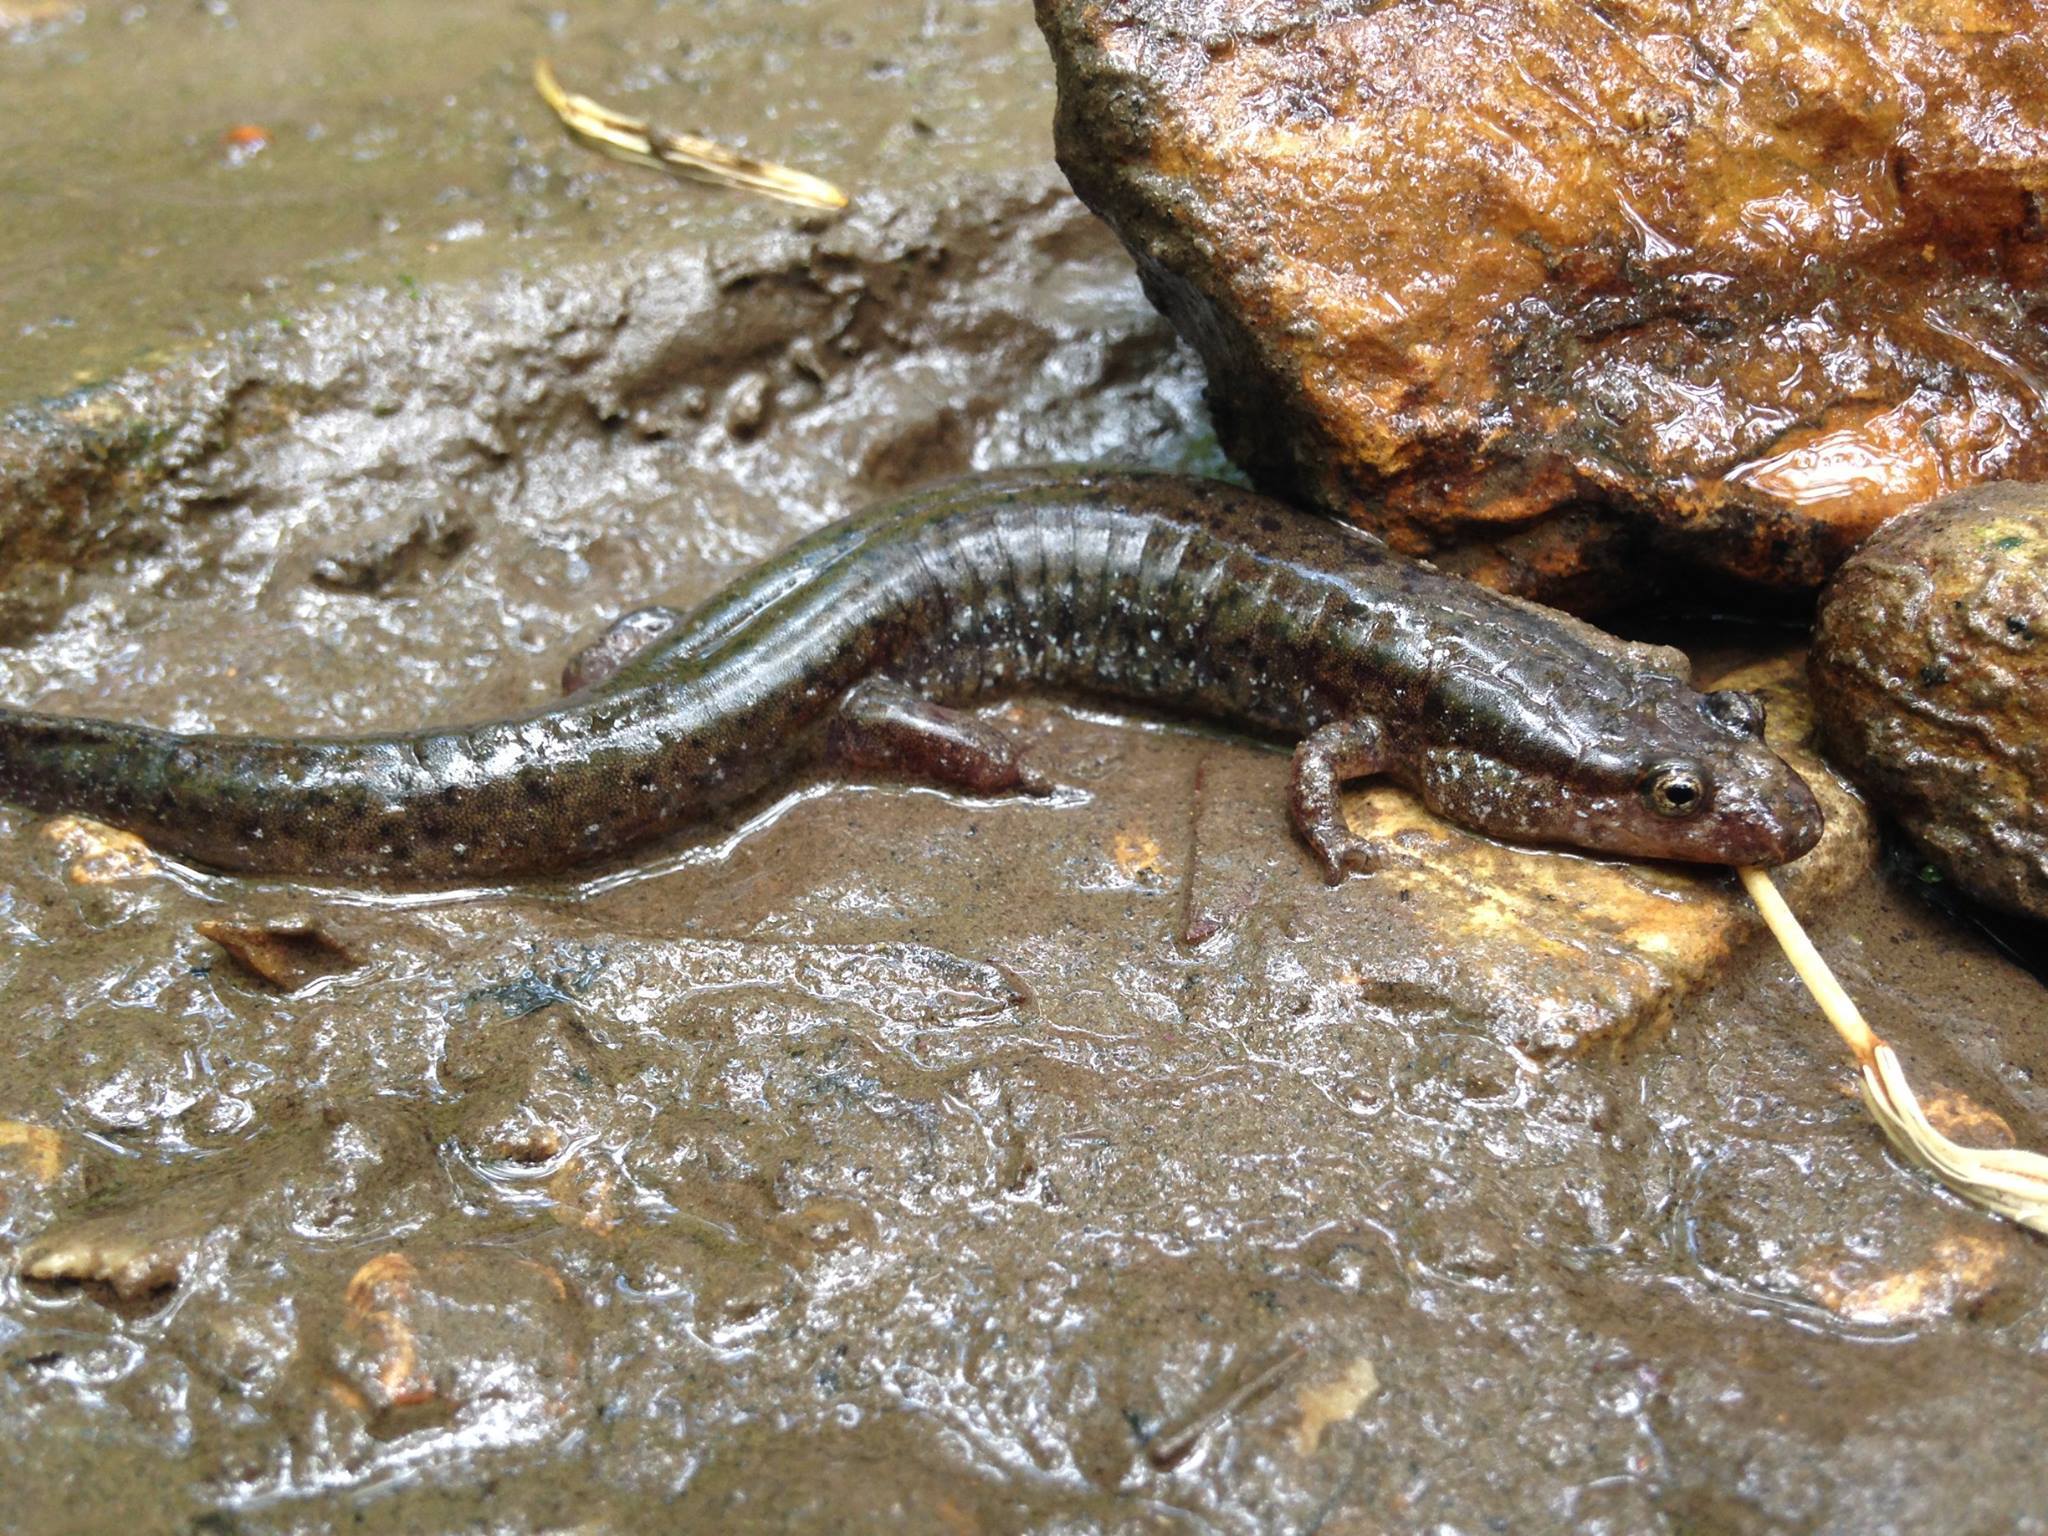 Salamander sits in the muddy water next to rocks